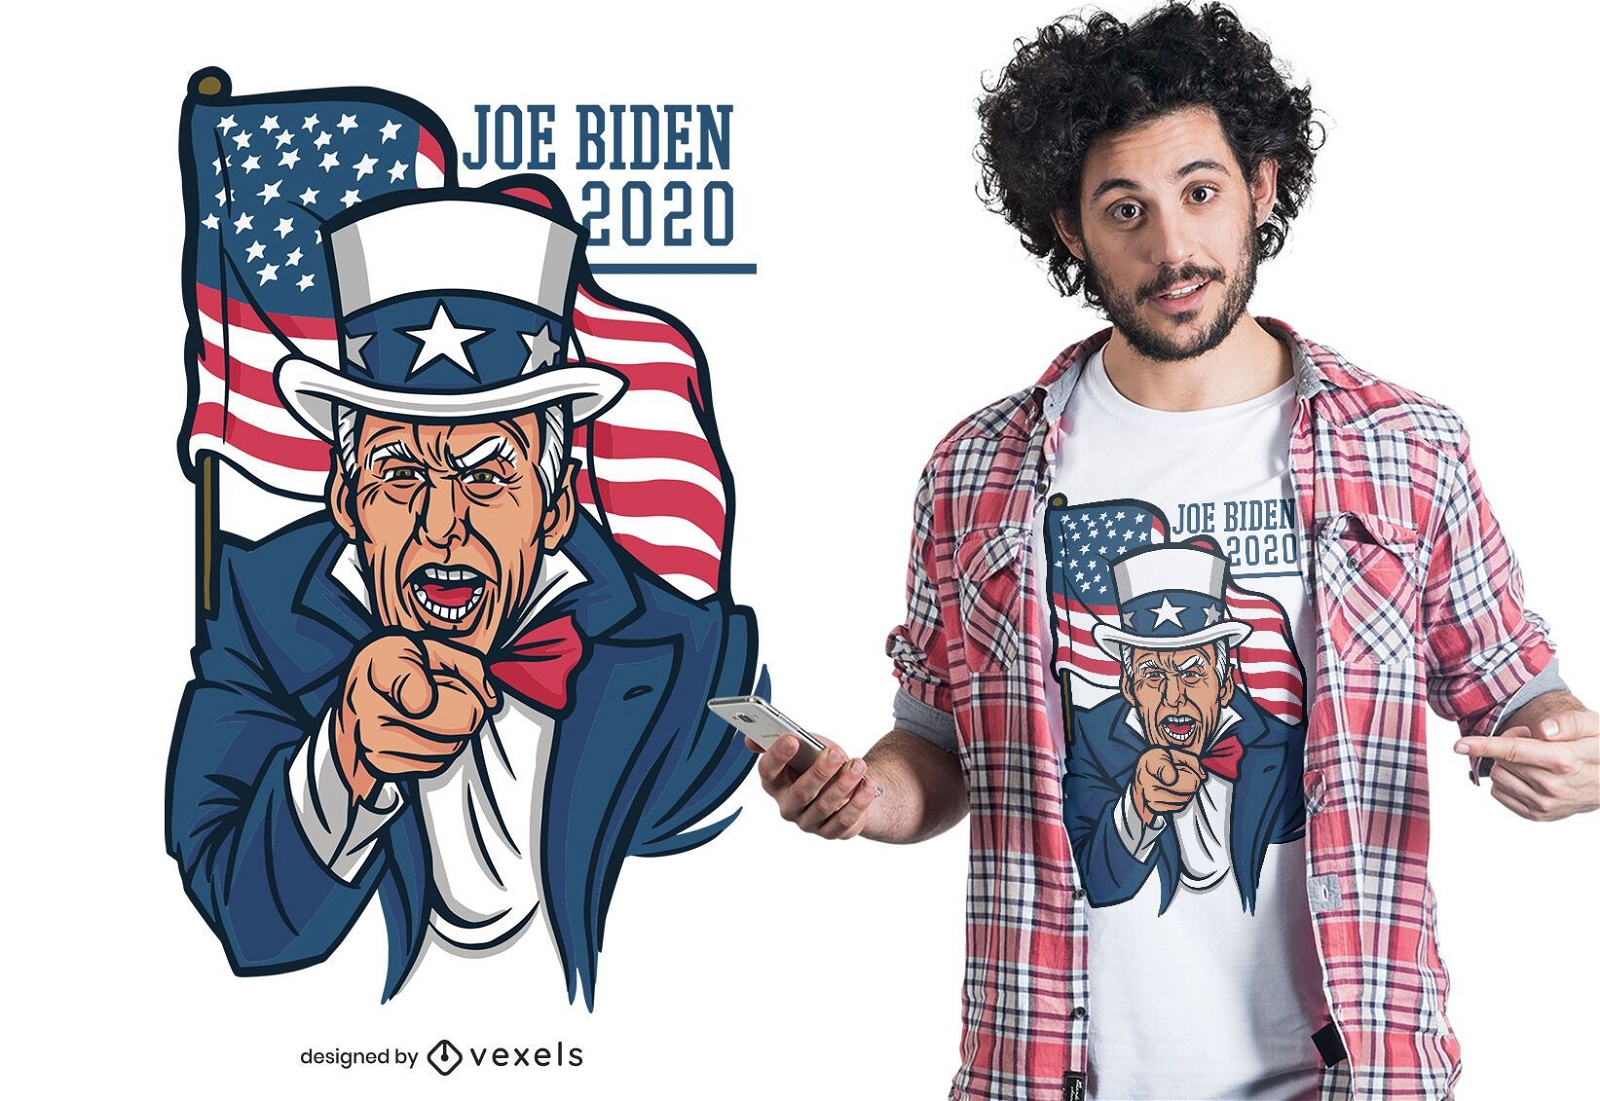 Joe biden 2020 t-shirt design